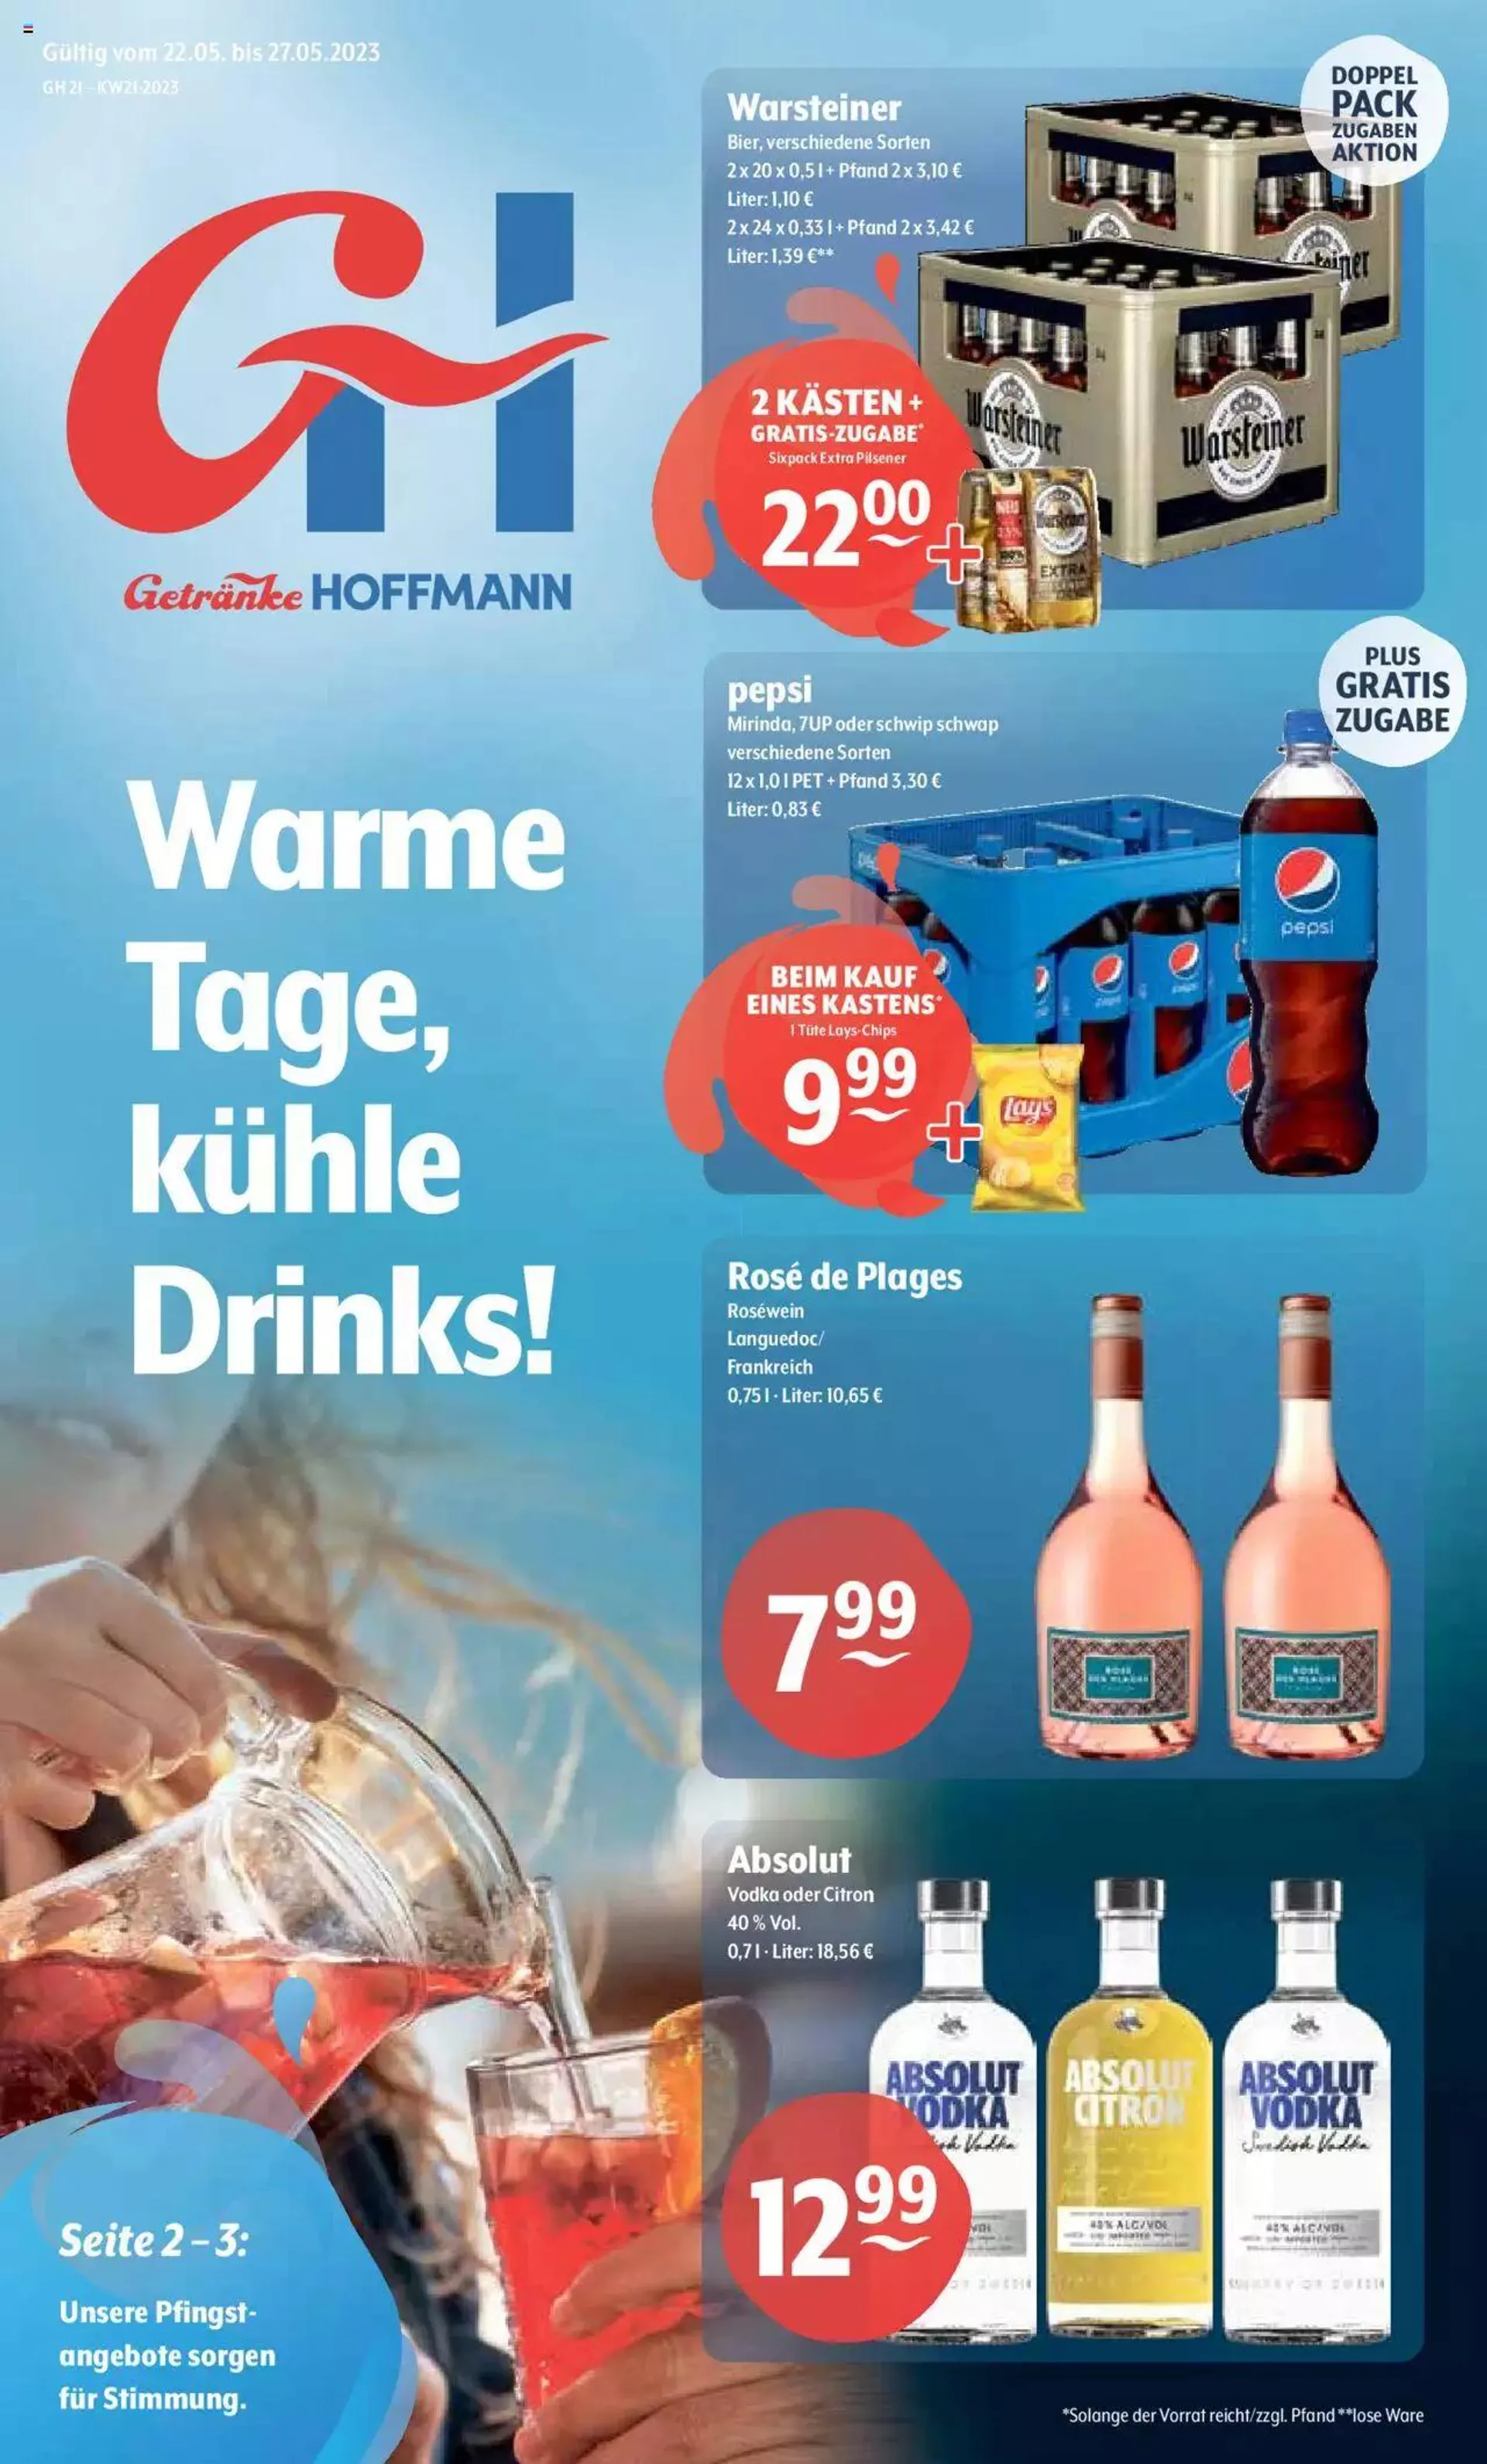 Getränke Hoffmann - Hamburg - 0